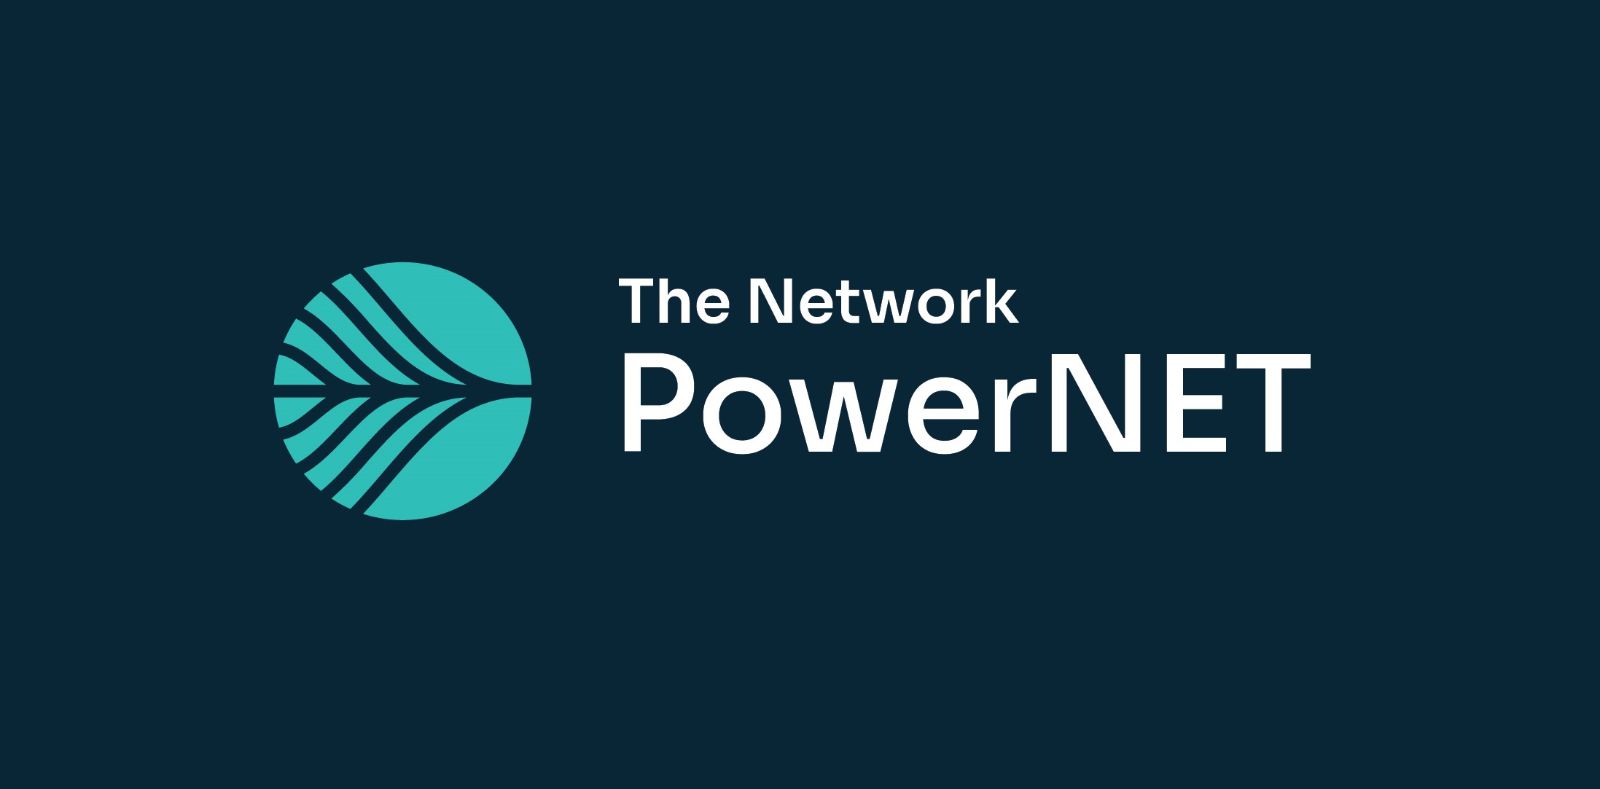 TheNetwork-PowerNet-Logo-Dark(1).jpg